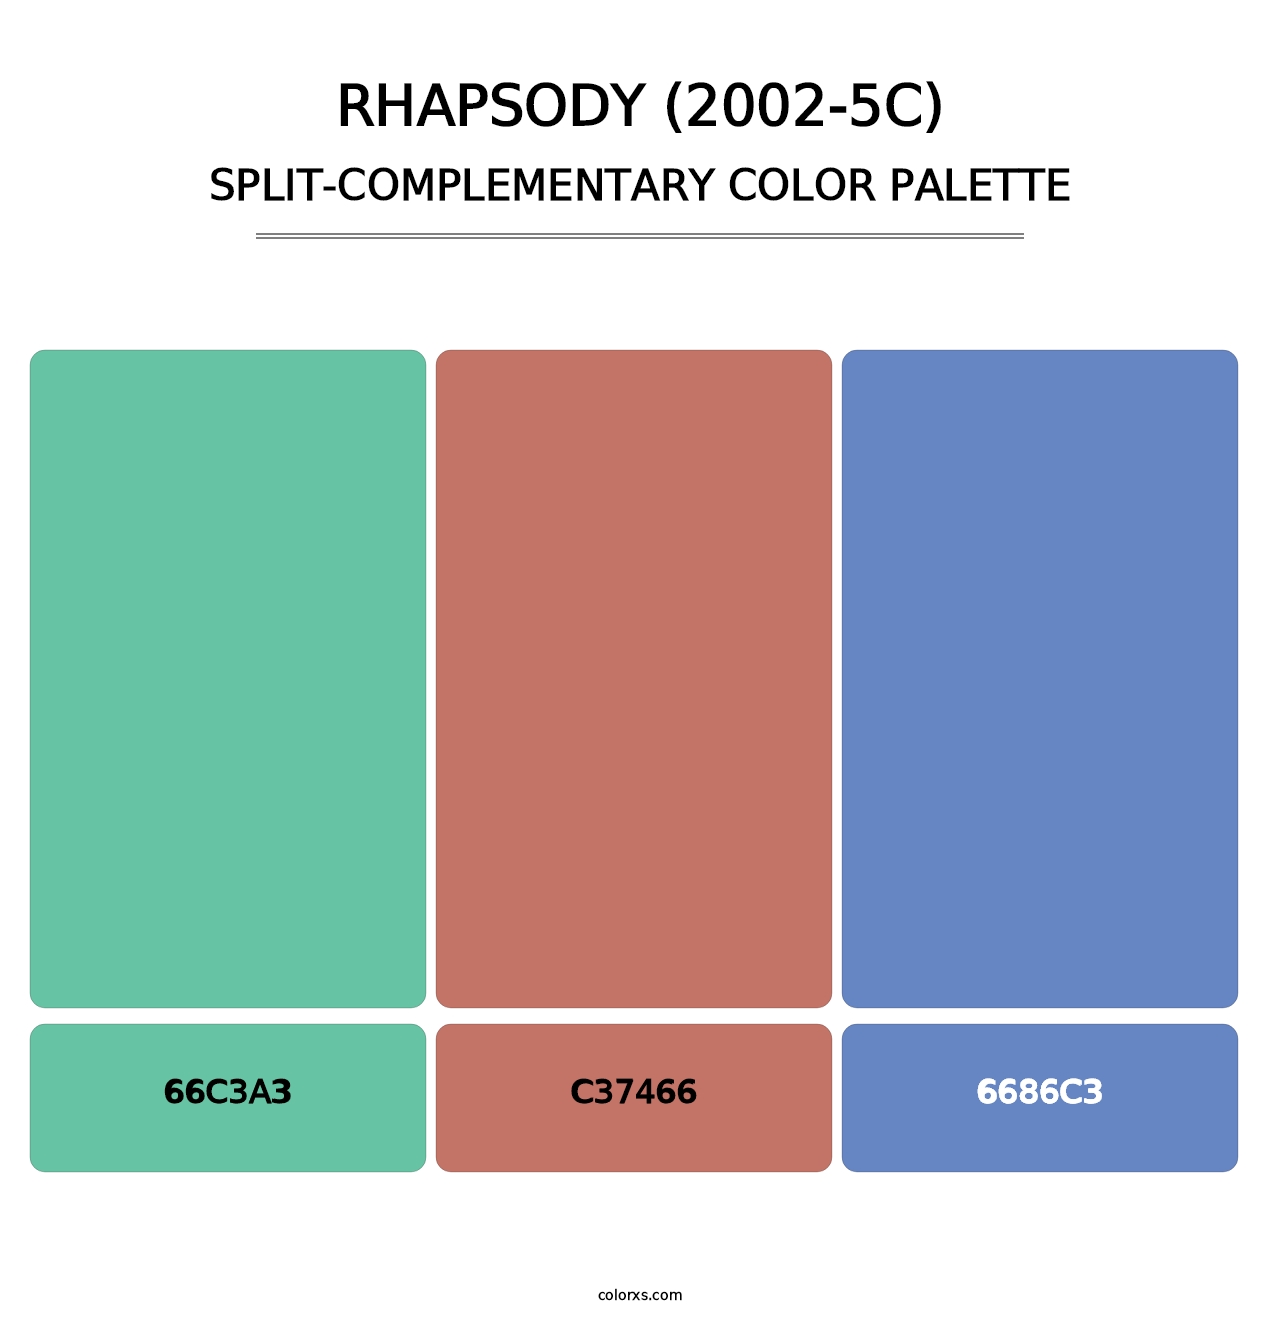 Rhapsody (2002-5C) - Split-Complementary Color Palette